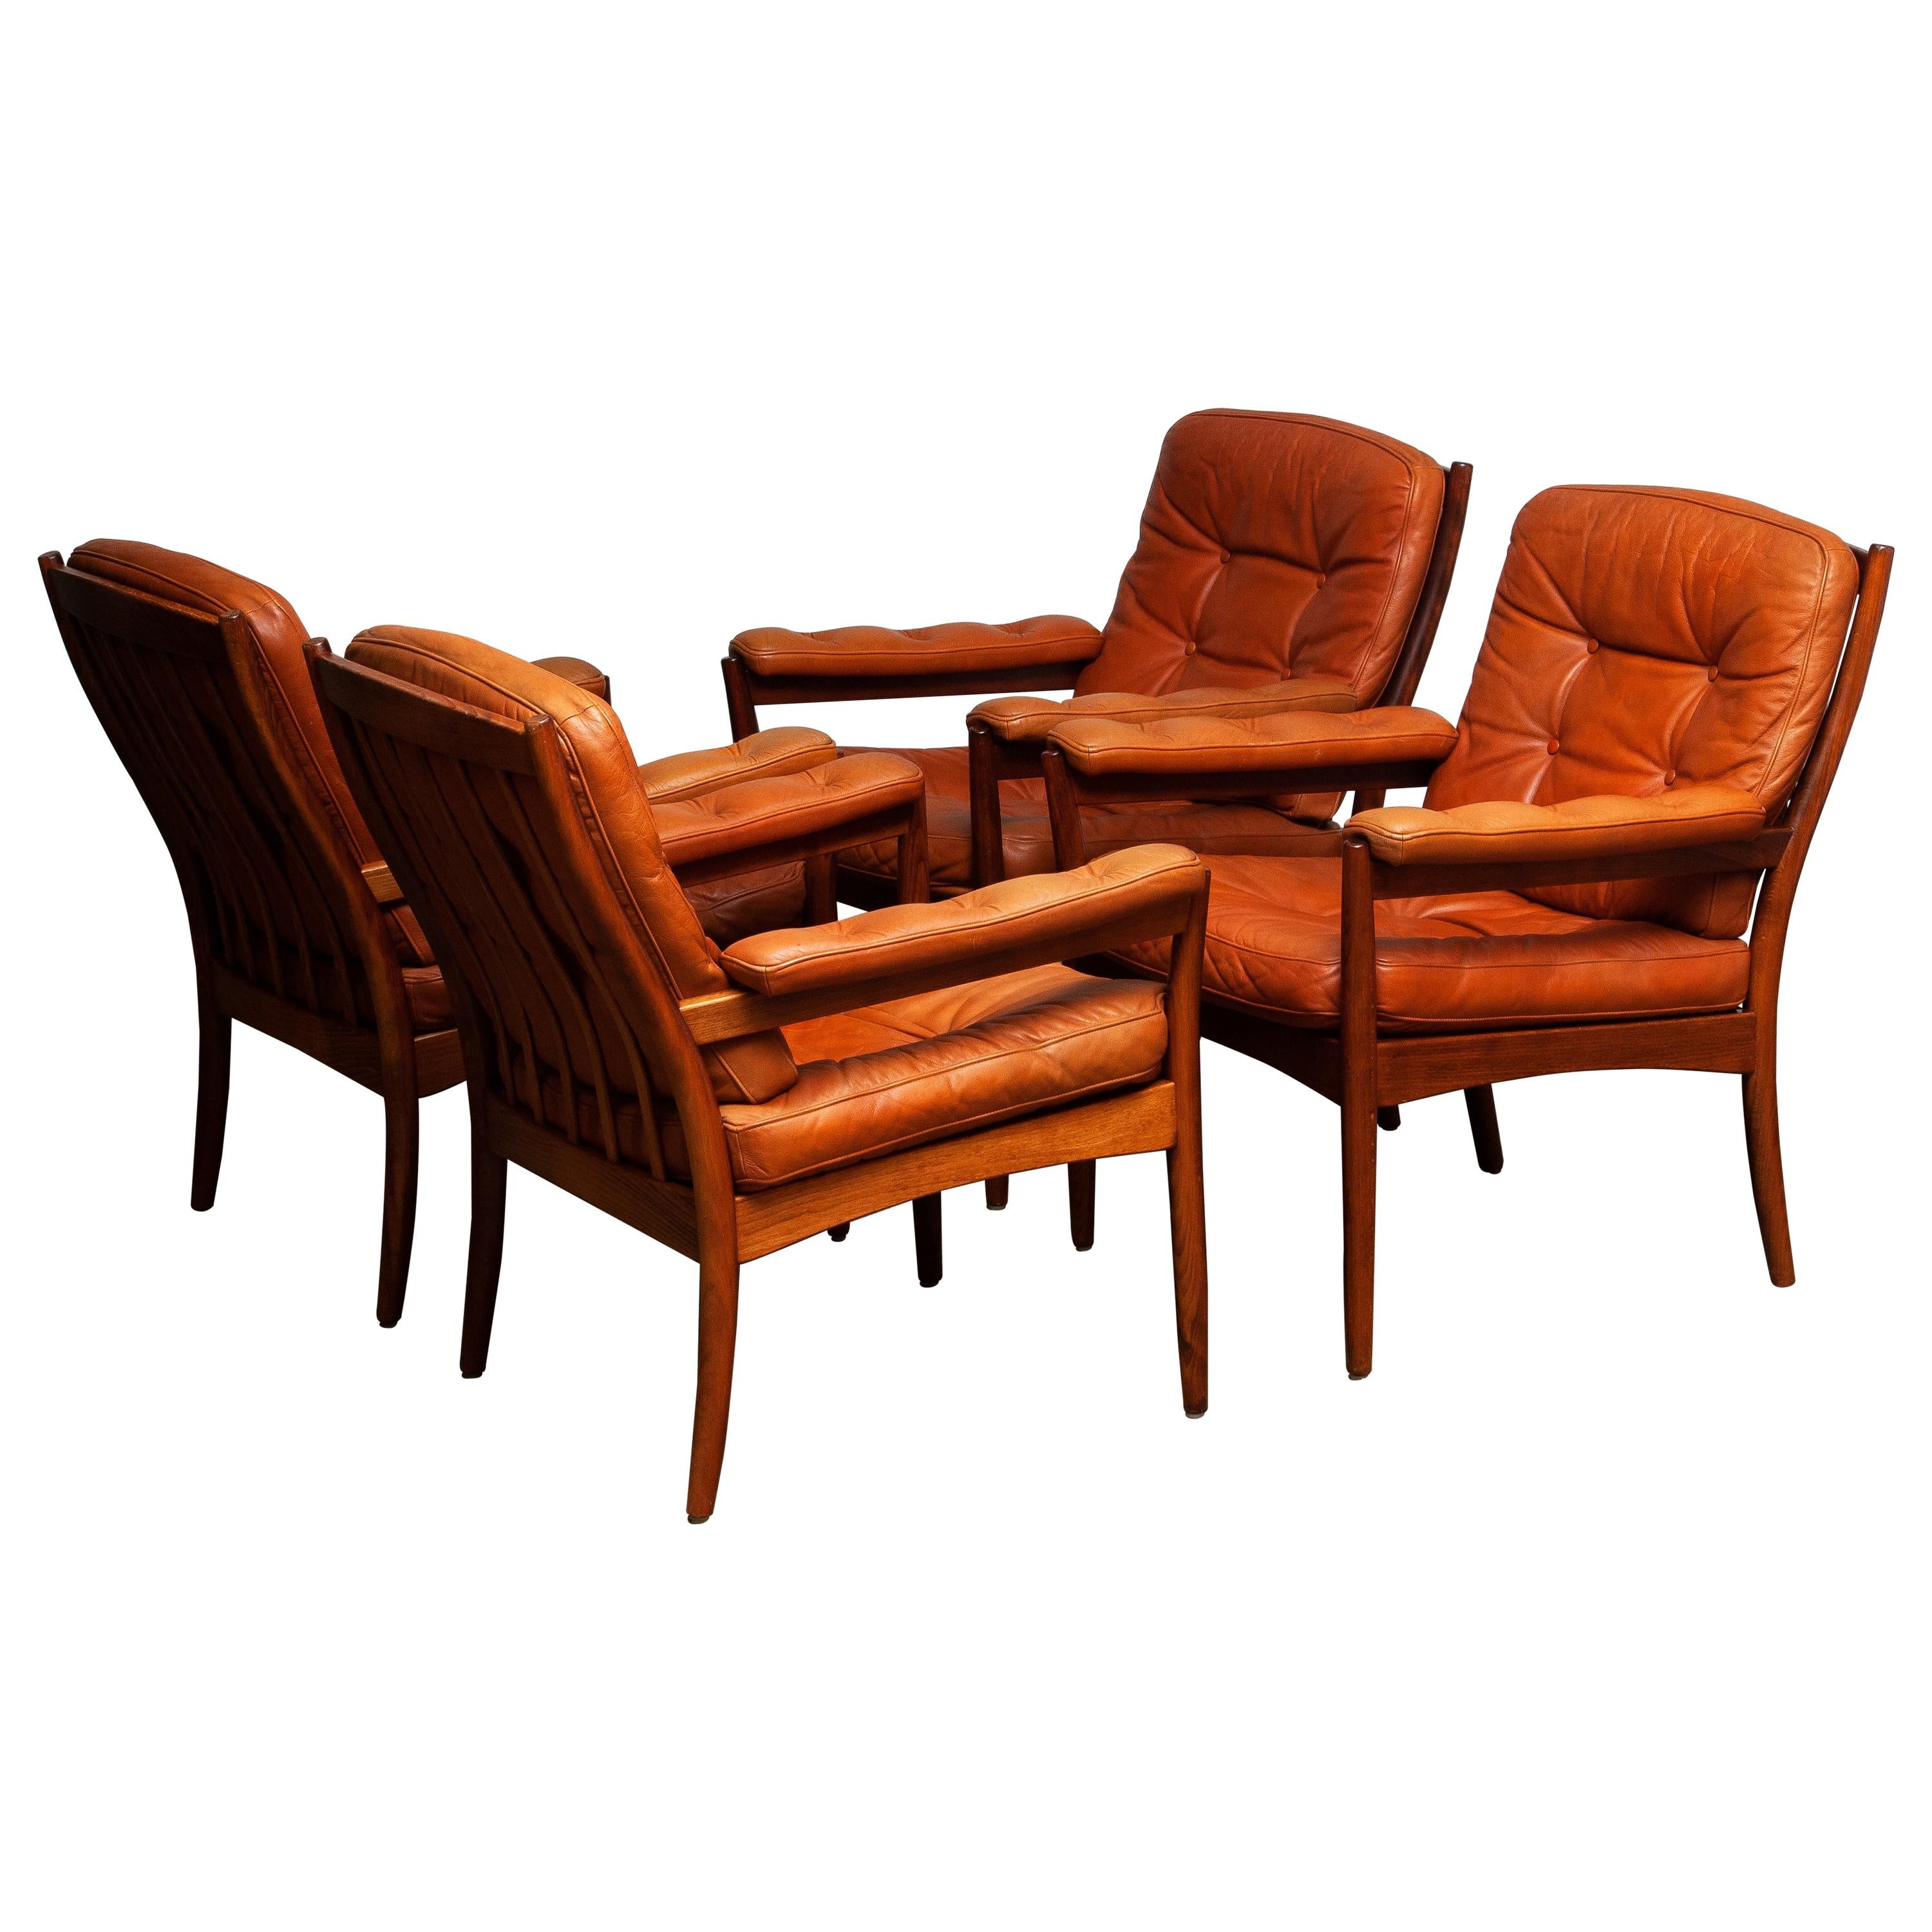 1960s, Four Cognac Leather Easy Chairs Made by Göte Design Nässjö, Sweden